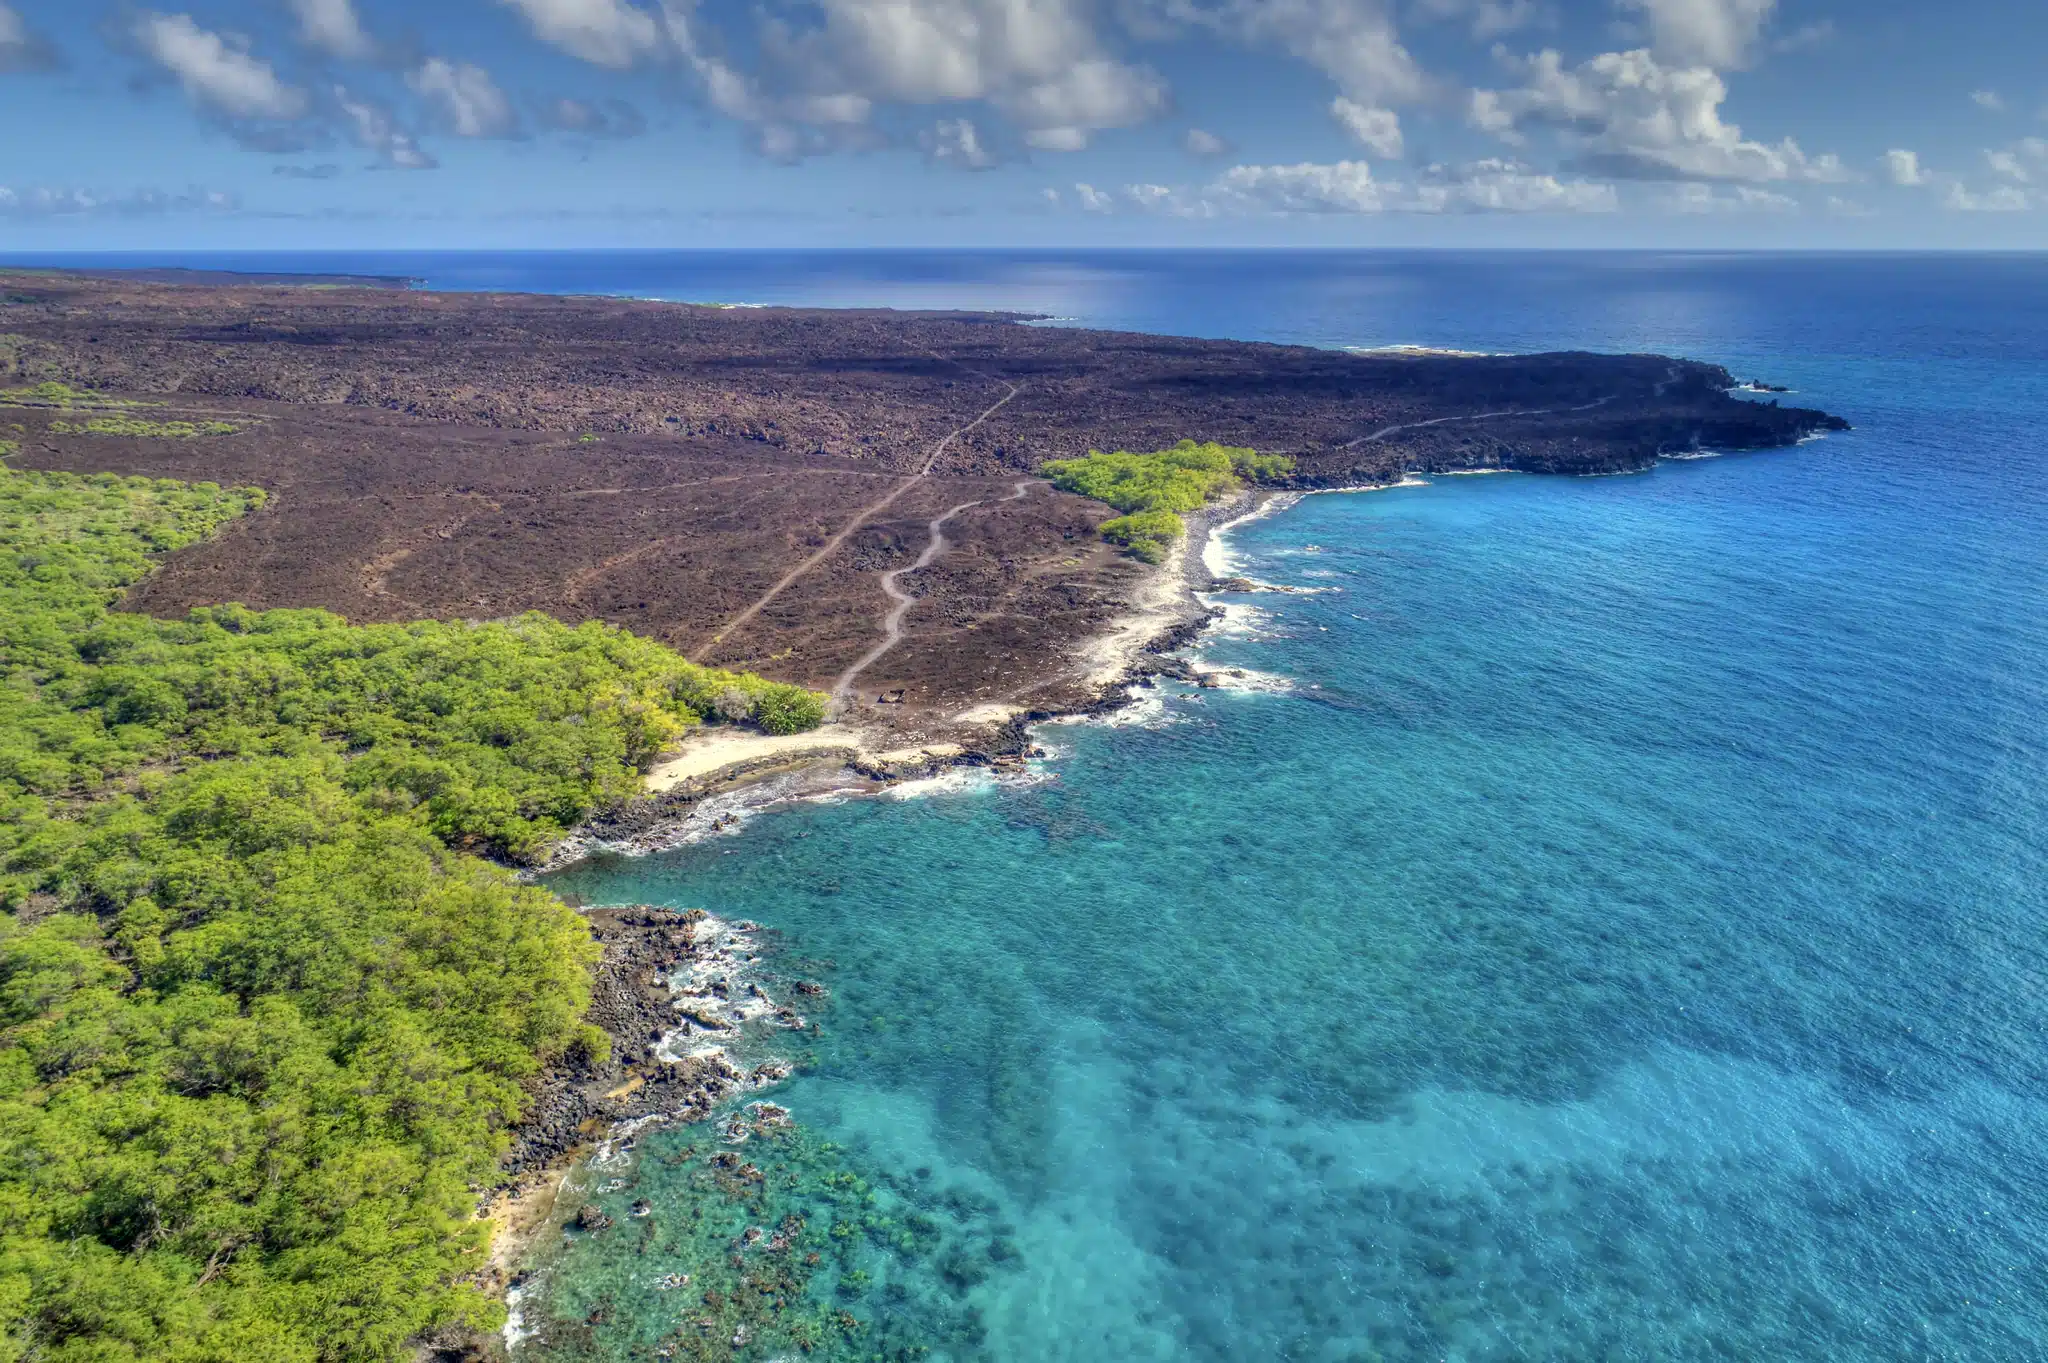 Hoapili Trail is a Hiking Trail located in the city of Kihei on Maui, Hawaii